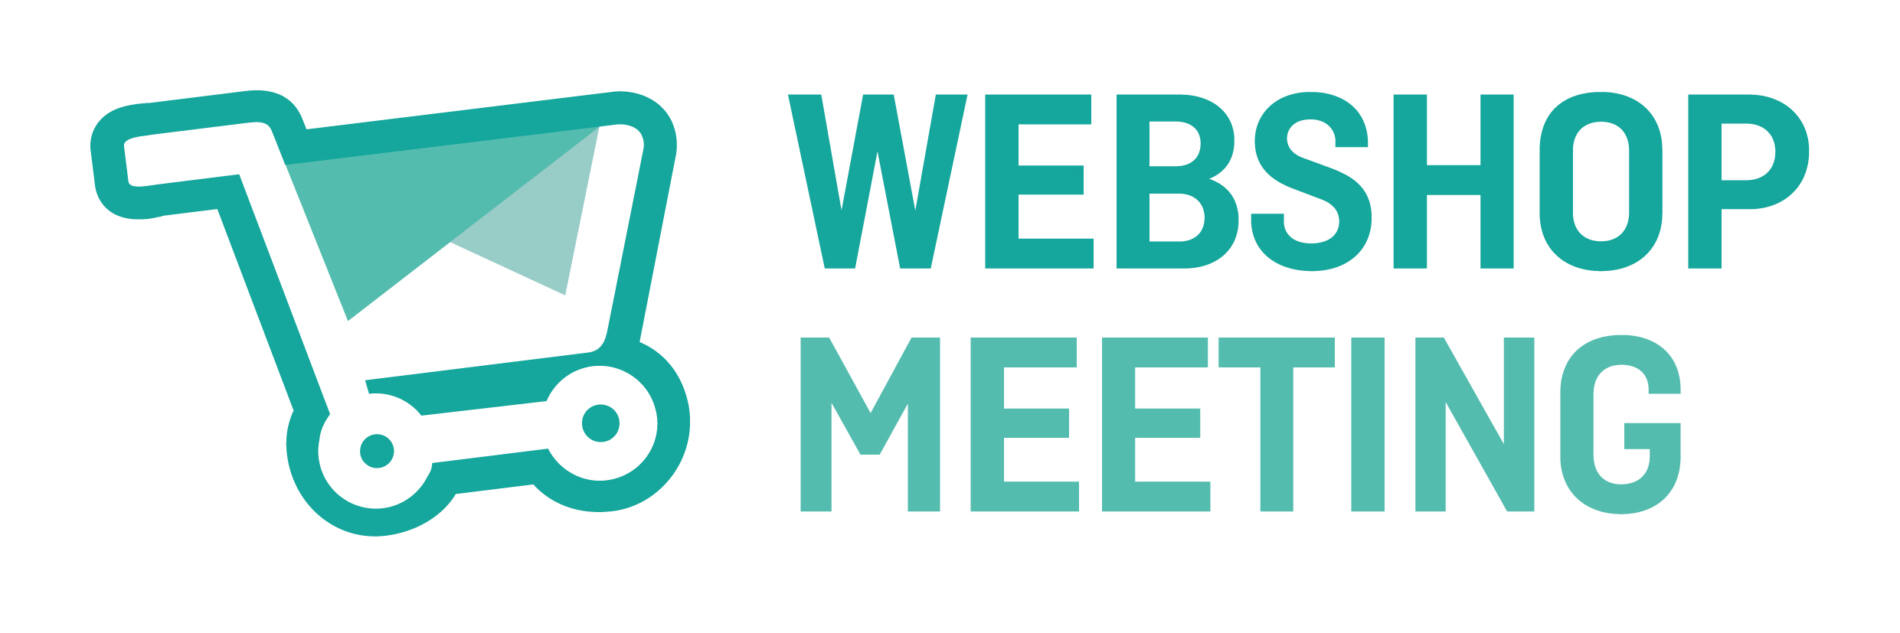 Webshopmeeting-logo